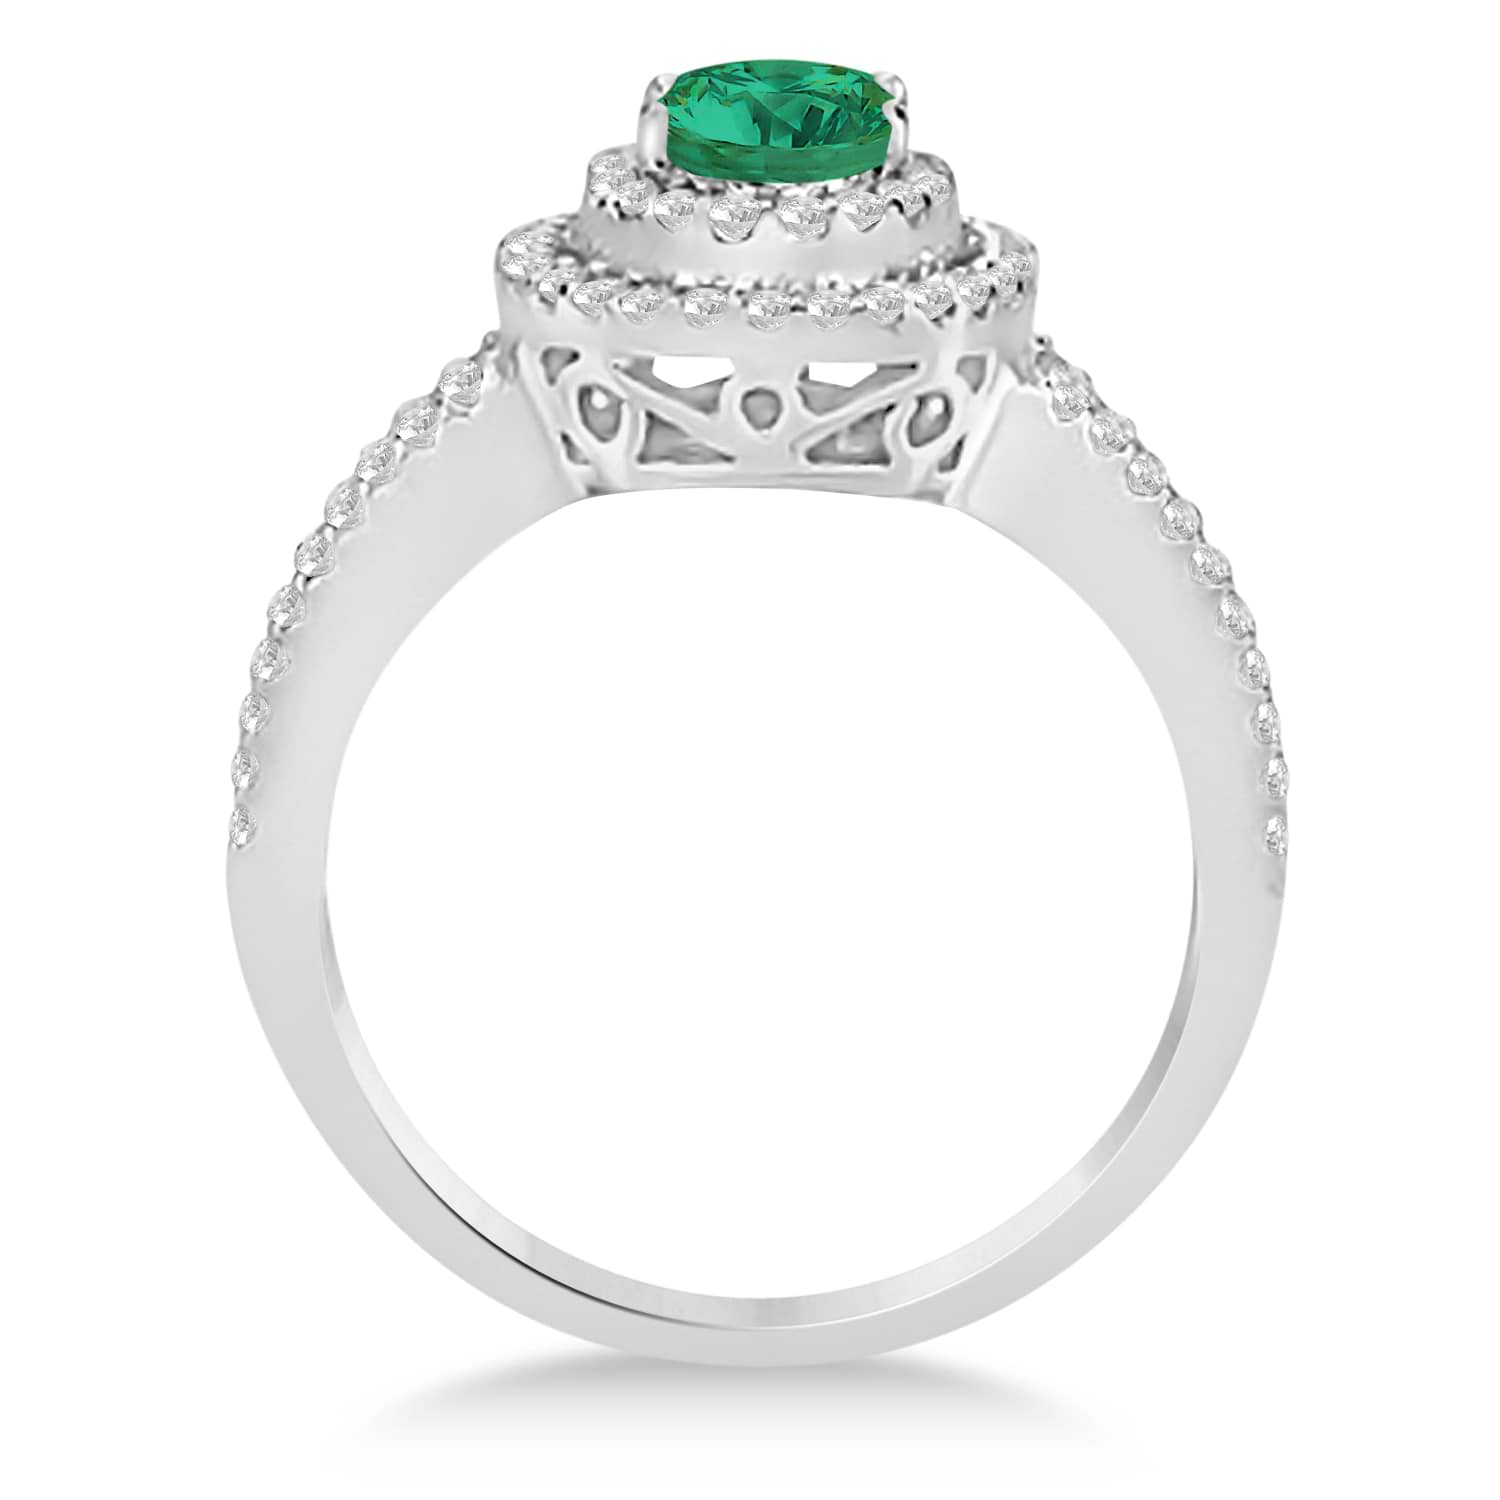 Double Halo Diamond & Emerald Engagement Ring 14K White Gold 1.34ctw